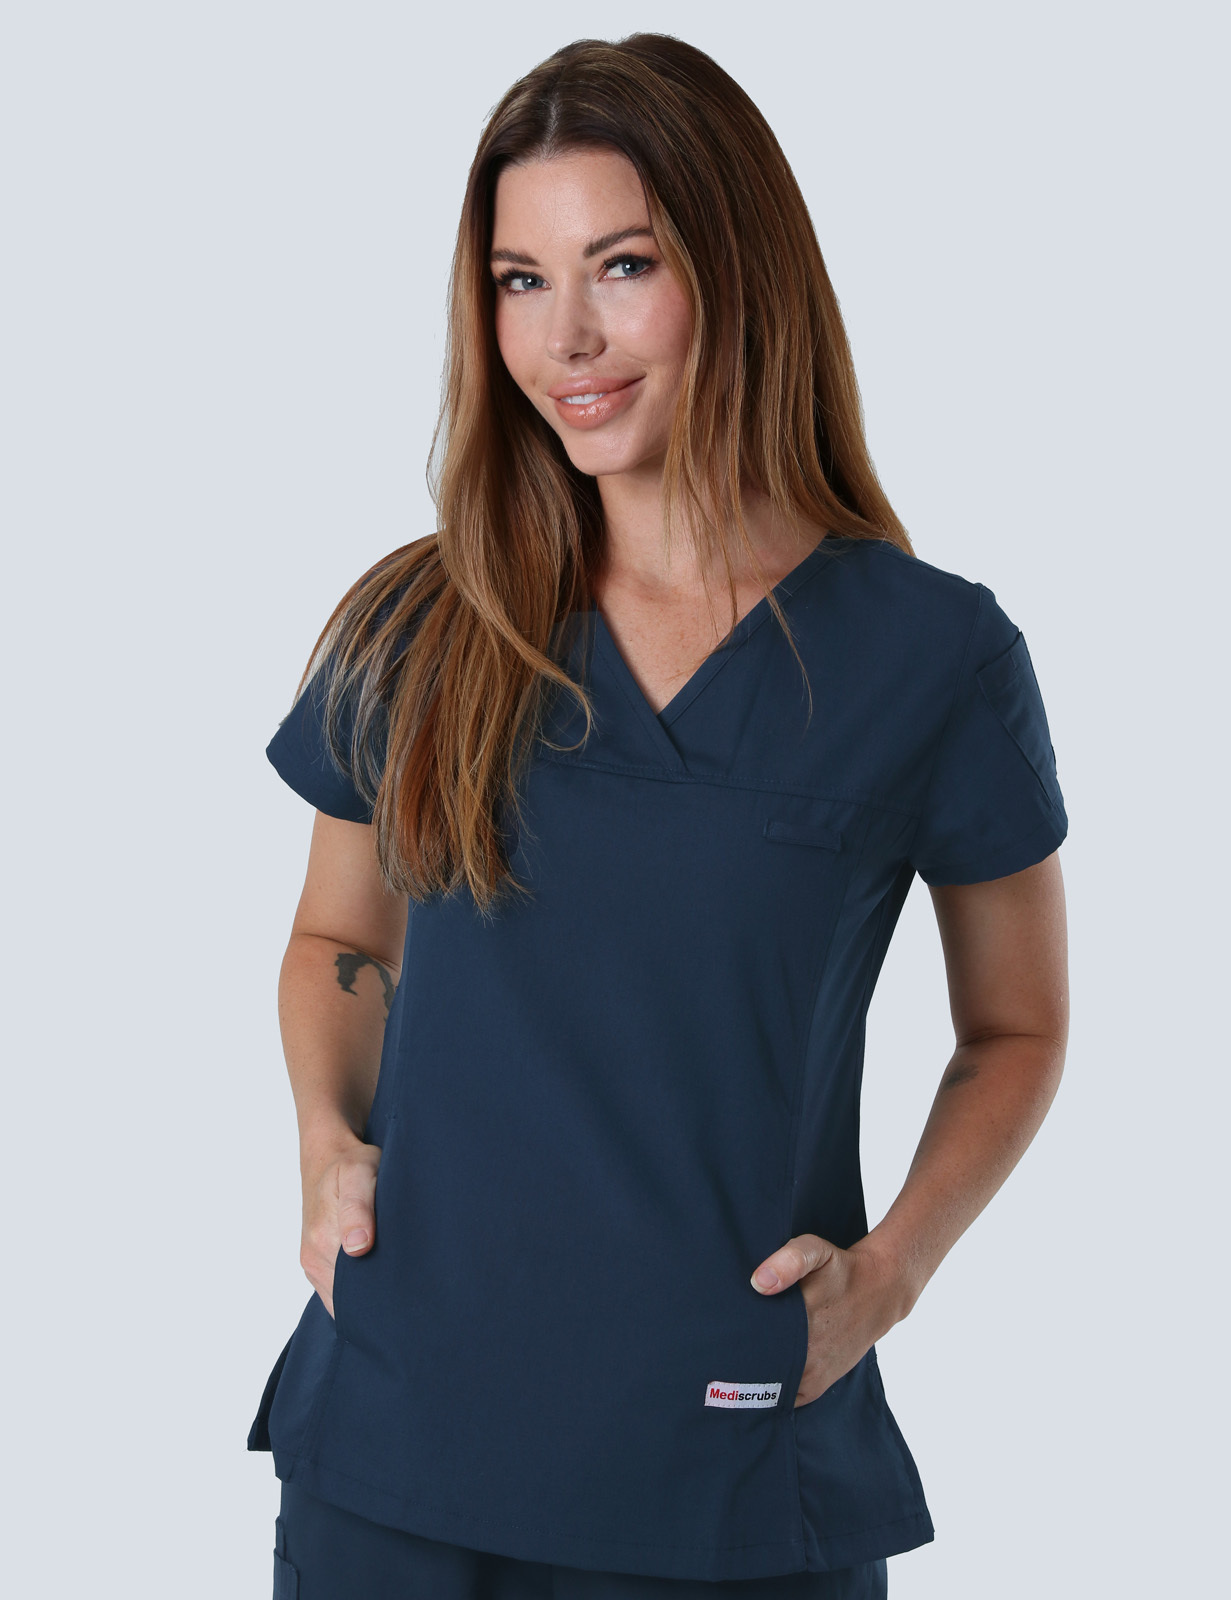 Regional Queensland Enrolled Nurse Advanced Skill Uniform Set Bundle (Women's Fit Solid Top and Cargo Pants in Navy incl Logos) 